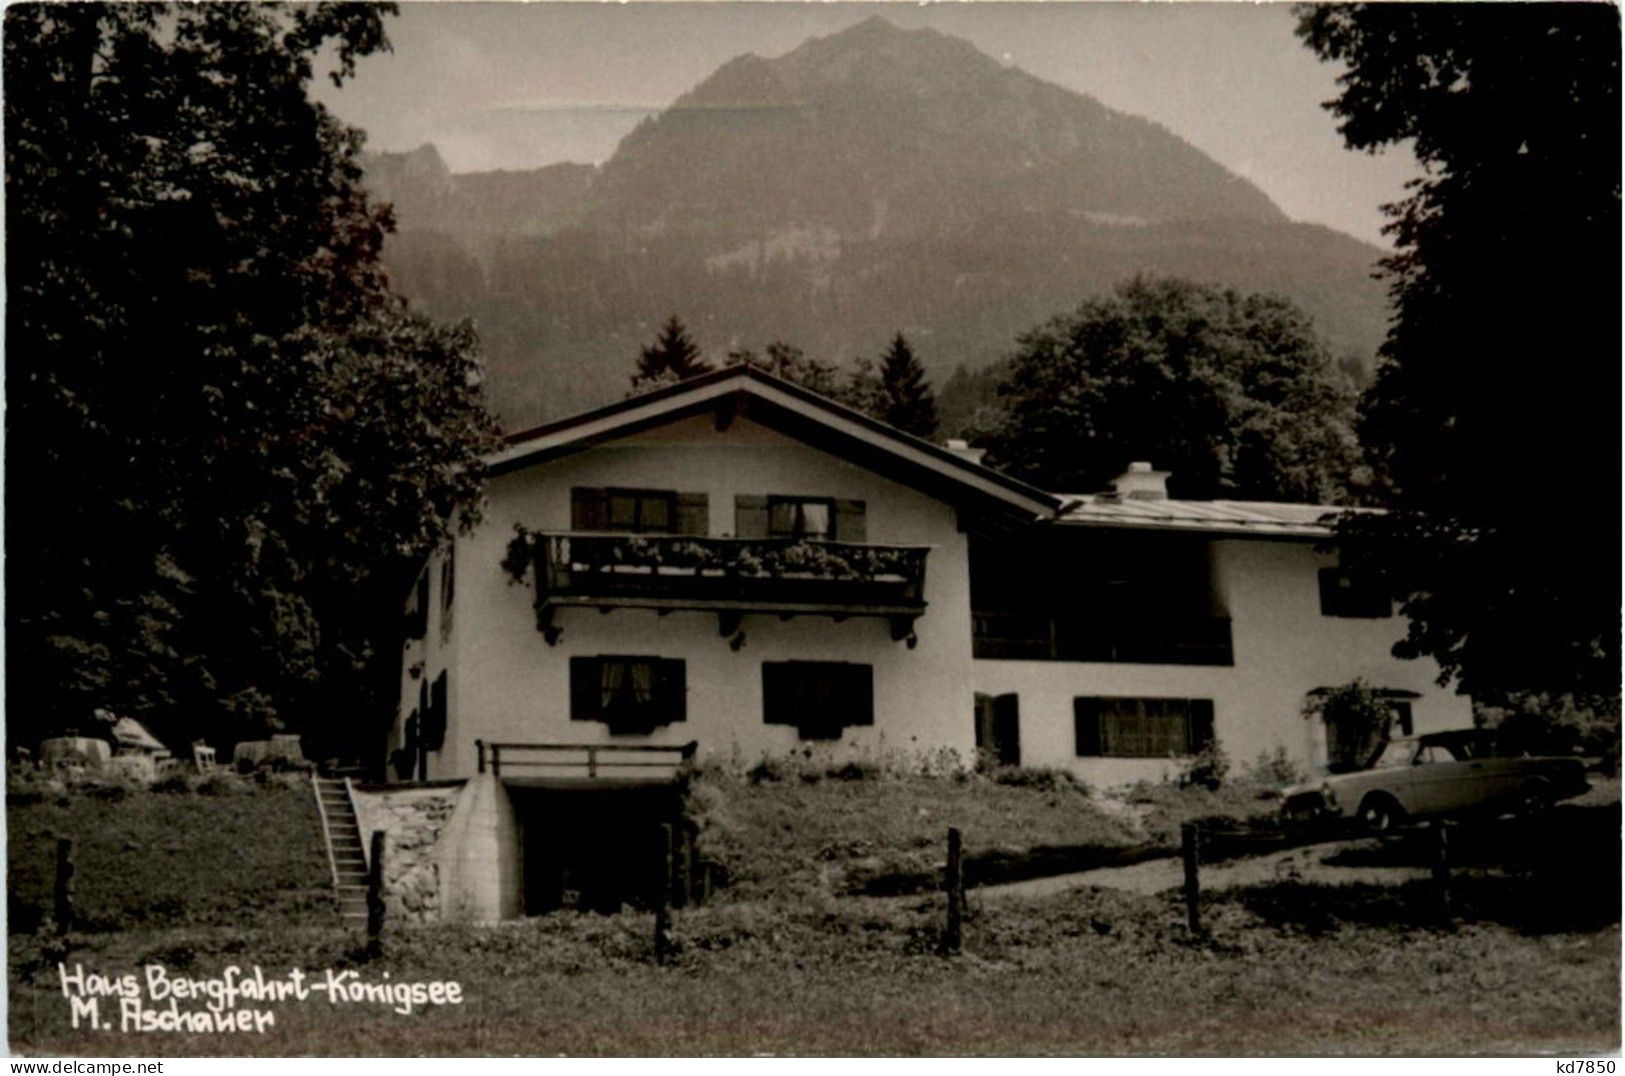 Königsee - Haus Bergfahrt - Berchtesgaden